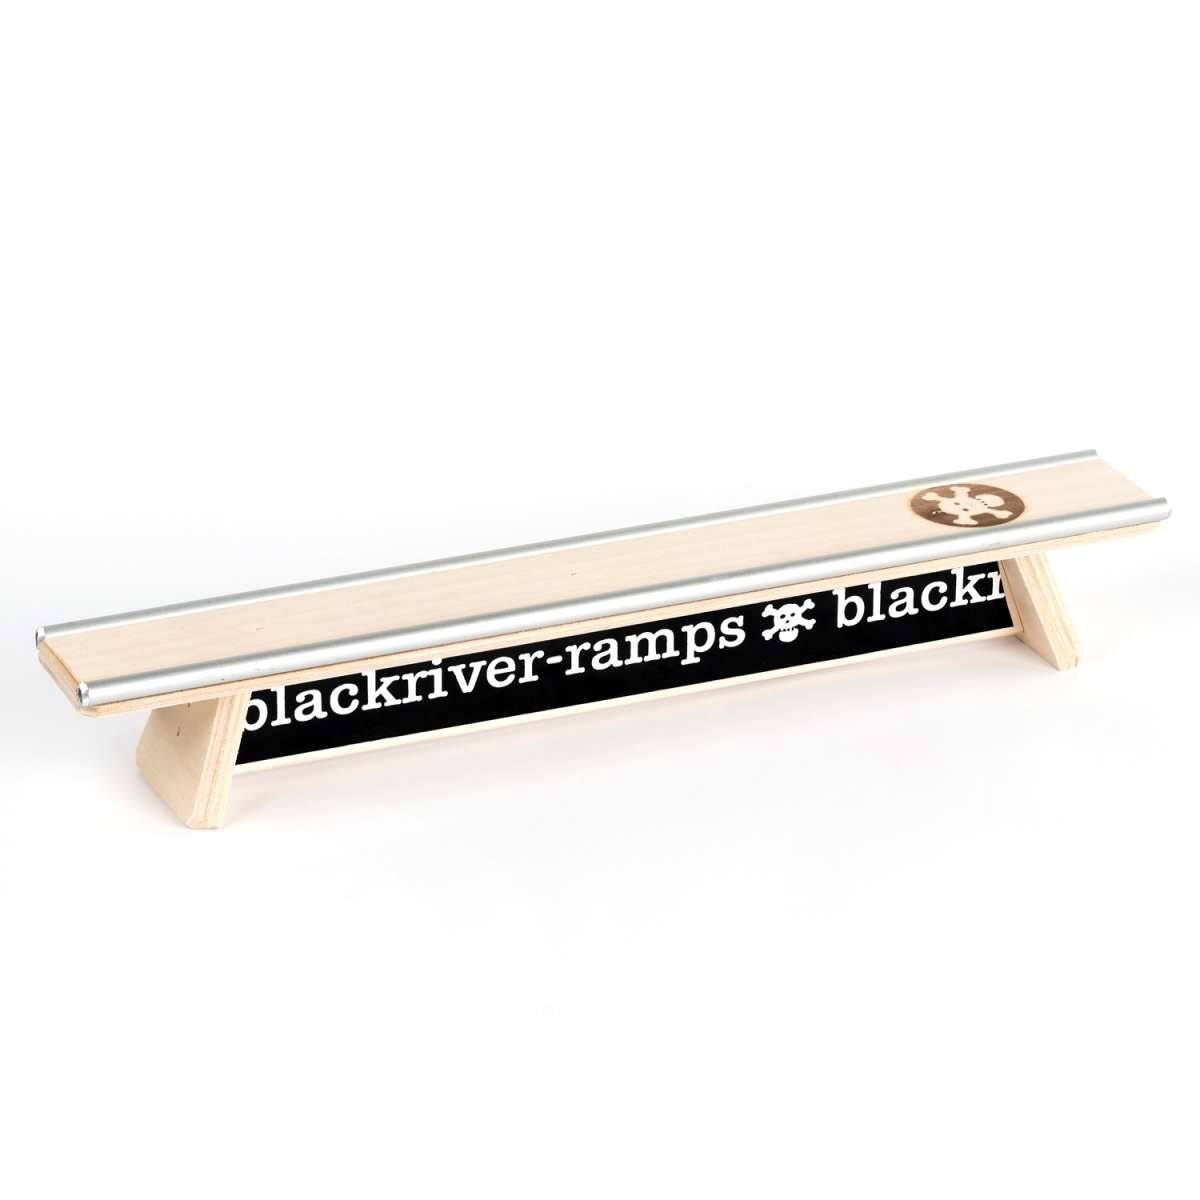 Blackriver ramps - School Bench